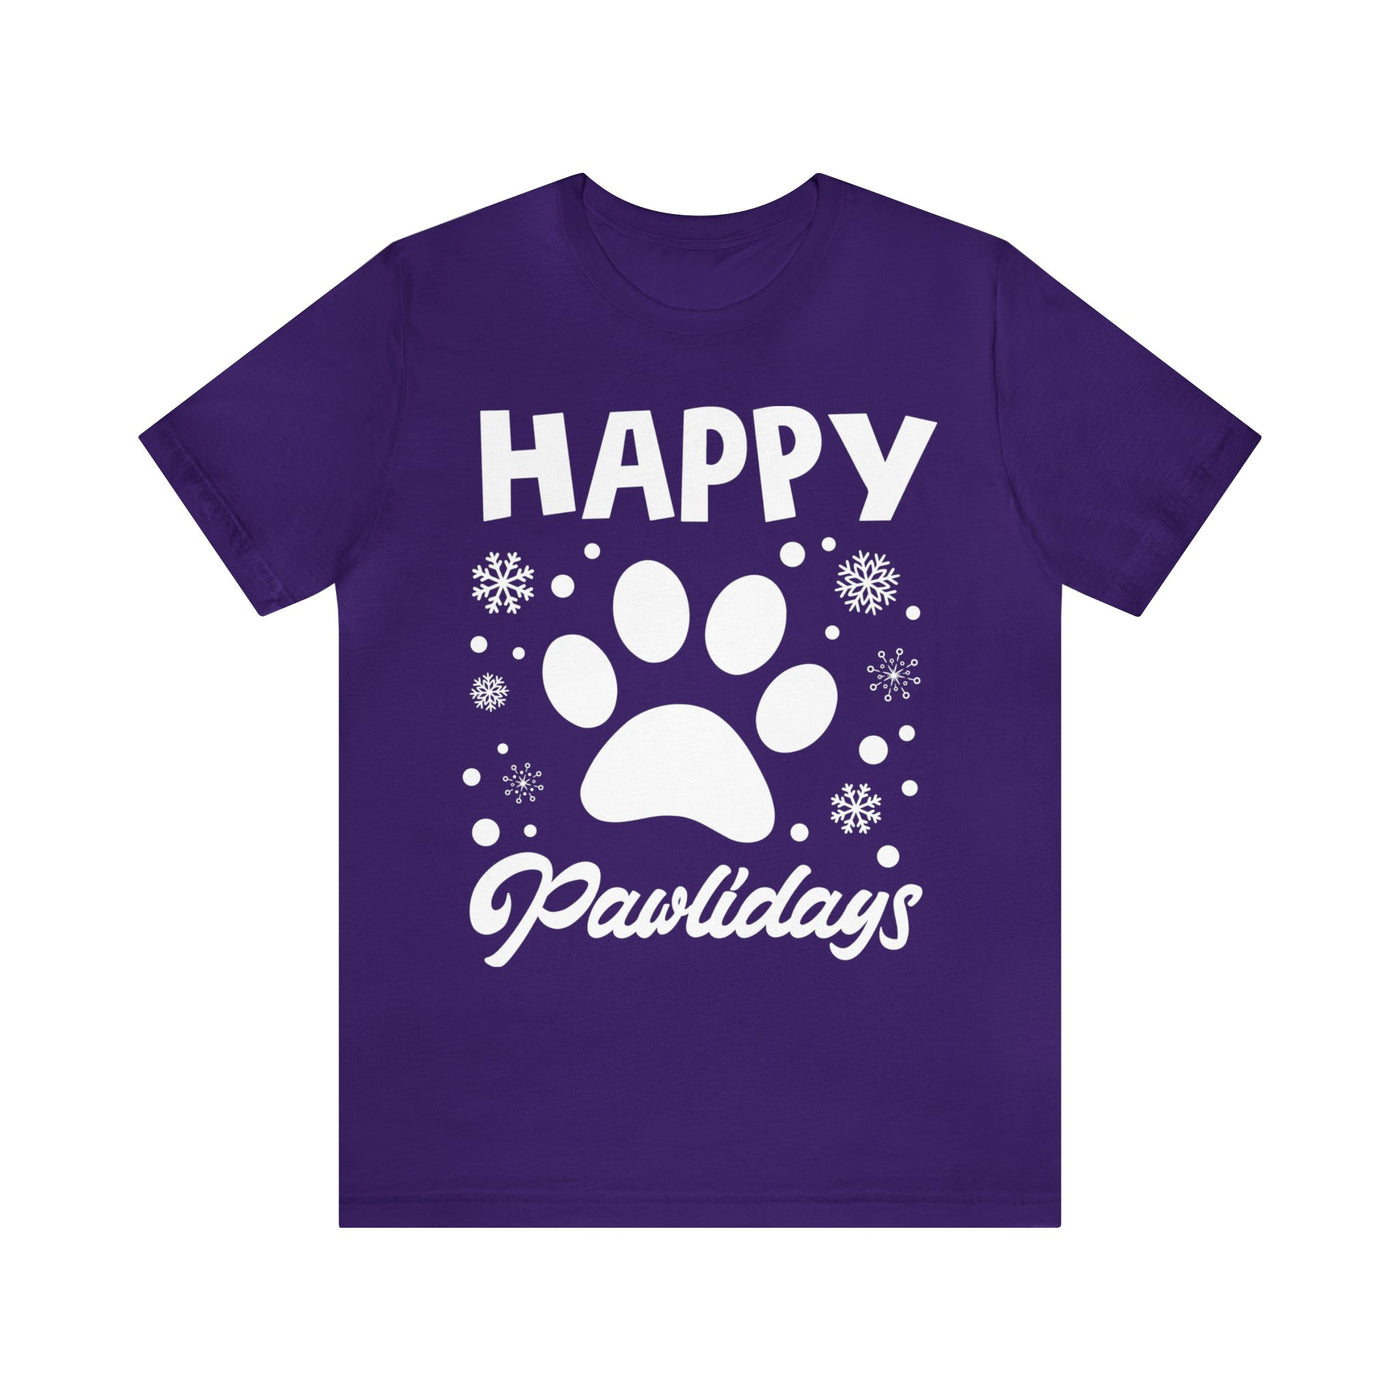 Happy Pawlidays T-Shirt